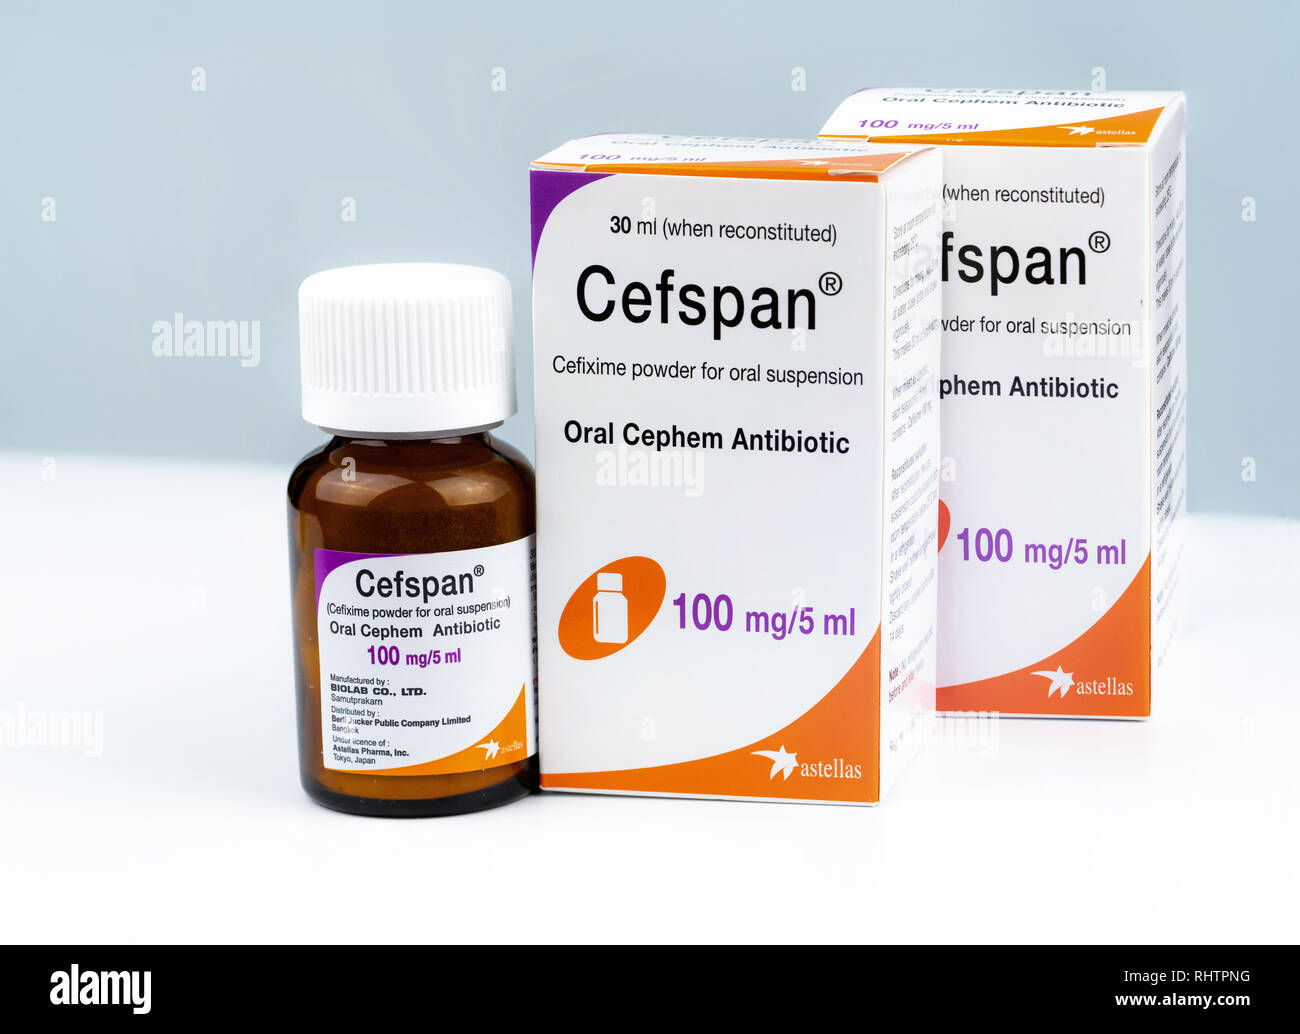 CHONBURI, THAILAND-AUGUST 3, 2018 : Cefspan 100 mg/5 ml. Oral Cephem Antibiotic. Cefixime powder for oral suspension 30 ml when reconstituted. Antibio Stock Photo